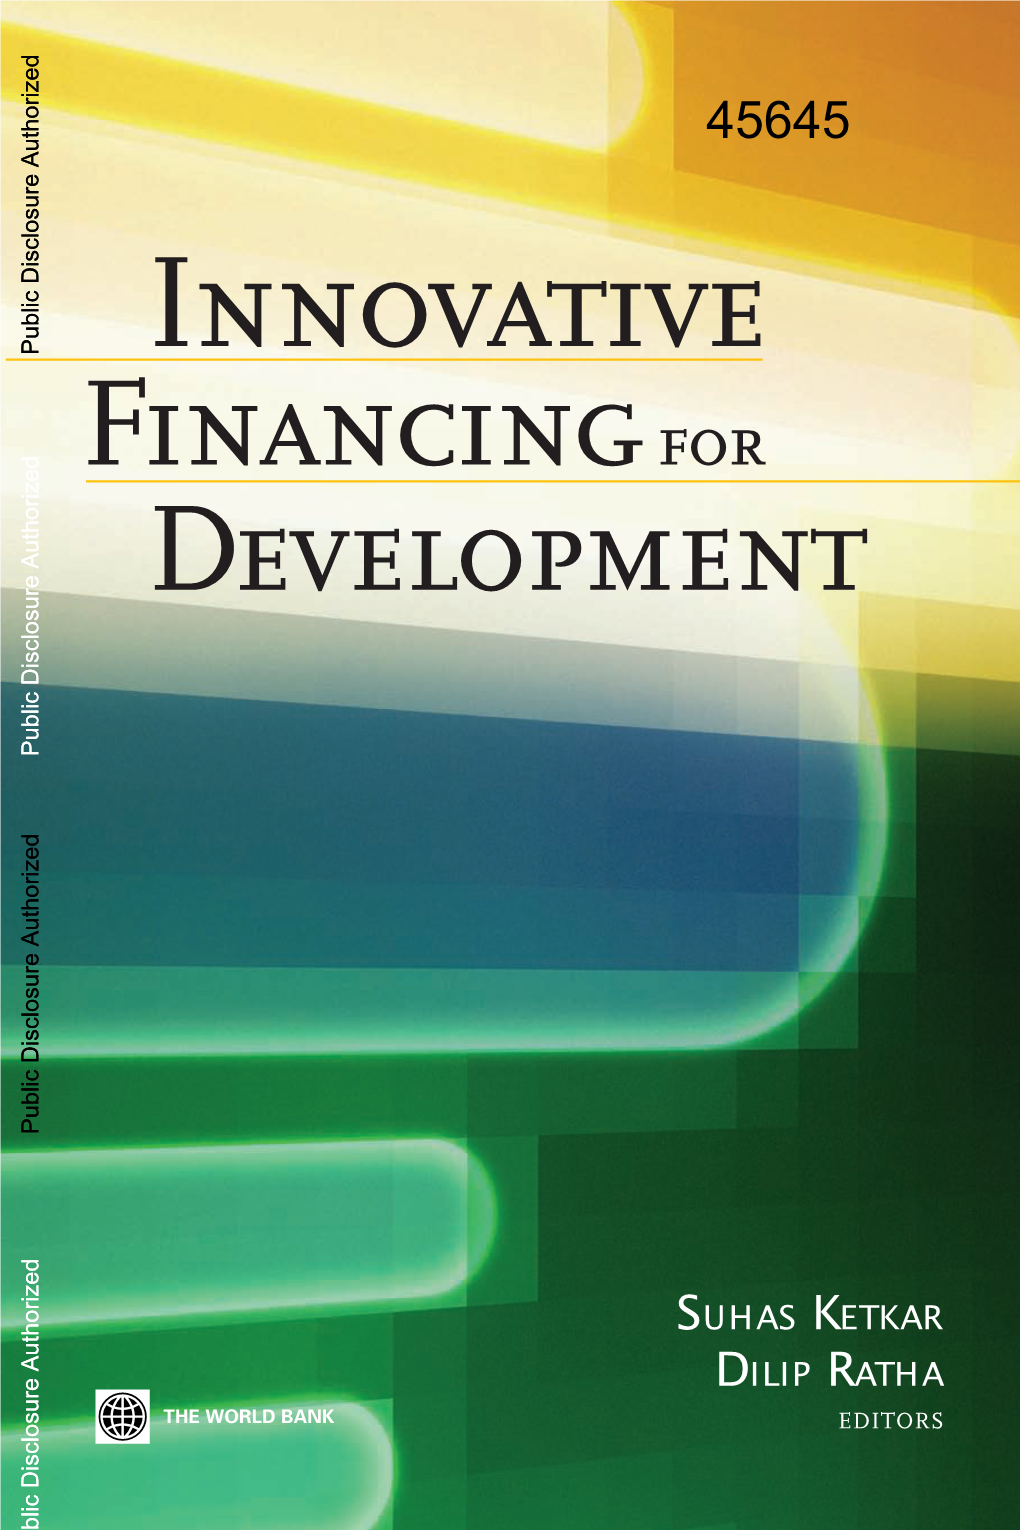 Innovative Financing for Development Public Disclosure Authorized Public Disclosure Authorized